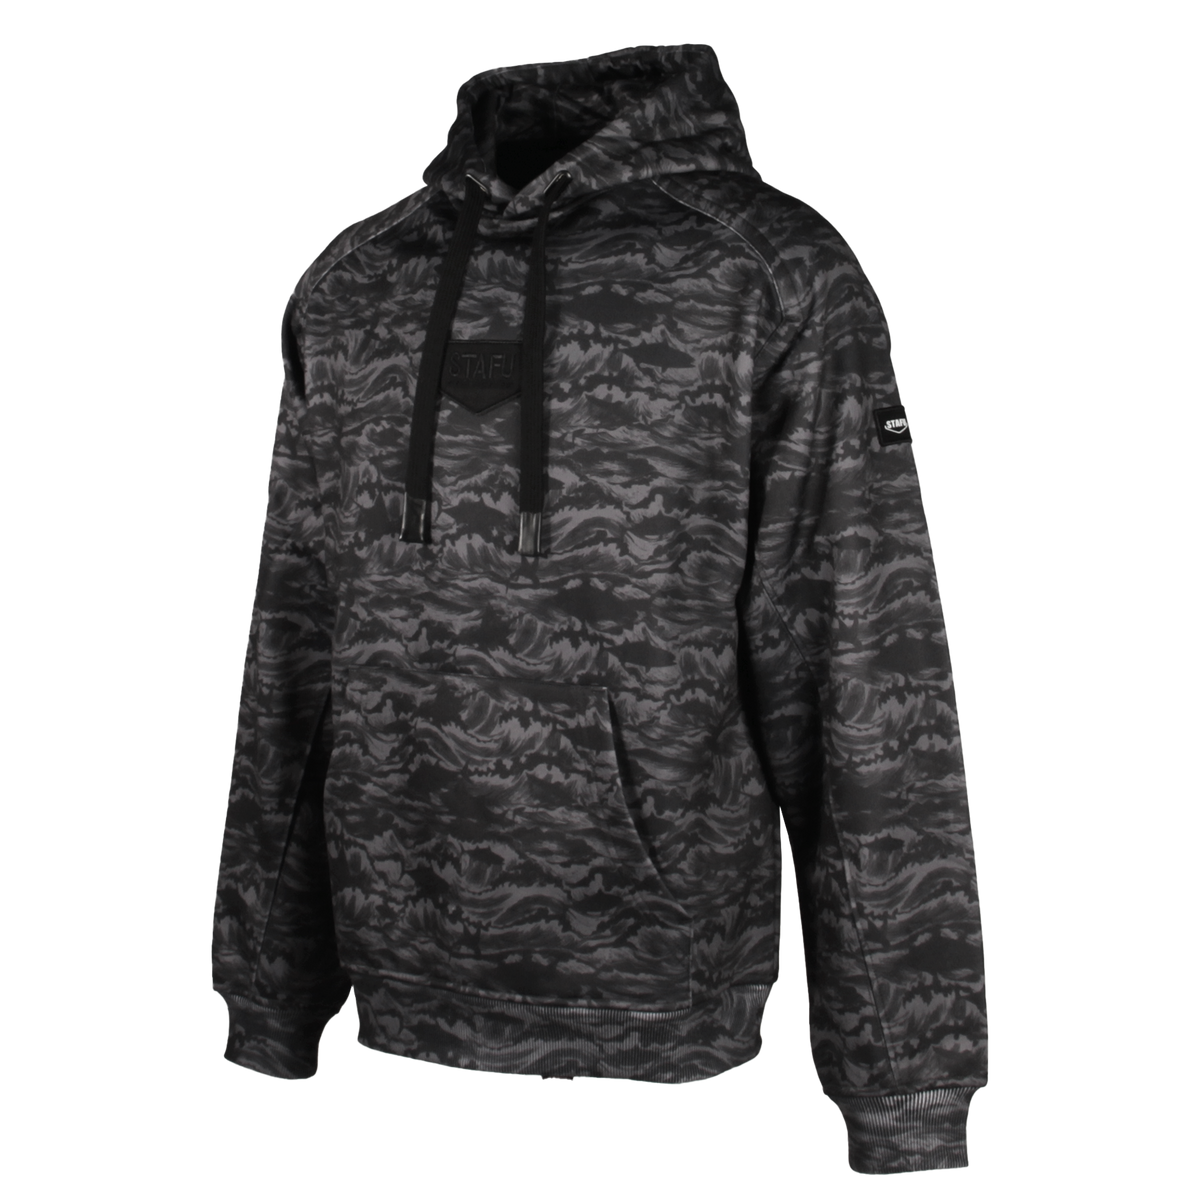 Prime Unisex Hooded Long Sleeve Signature Patterned Black Sweatshirt